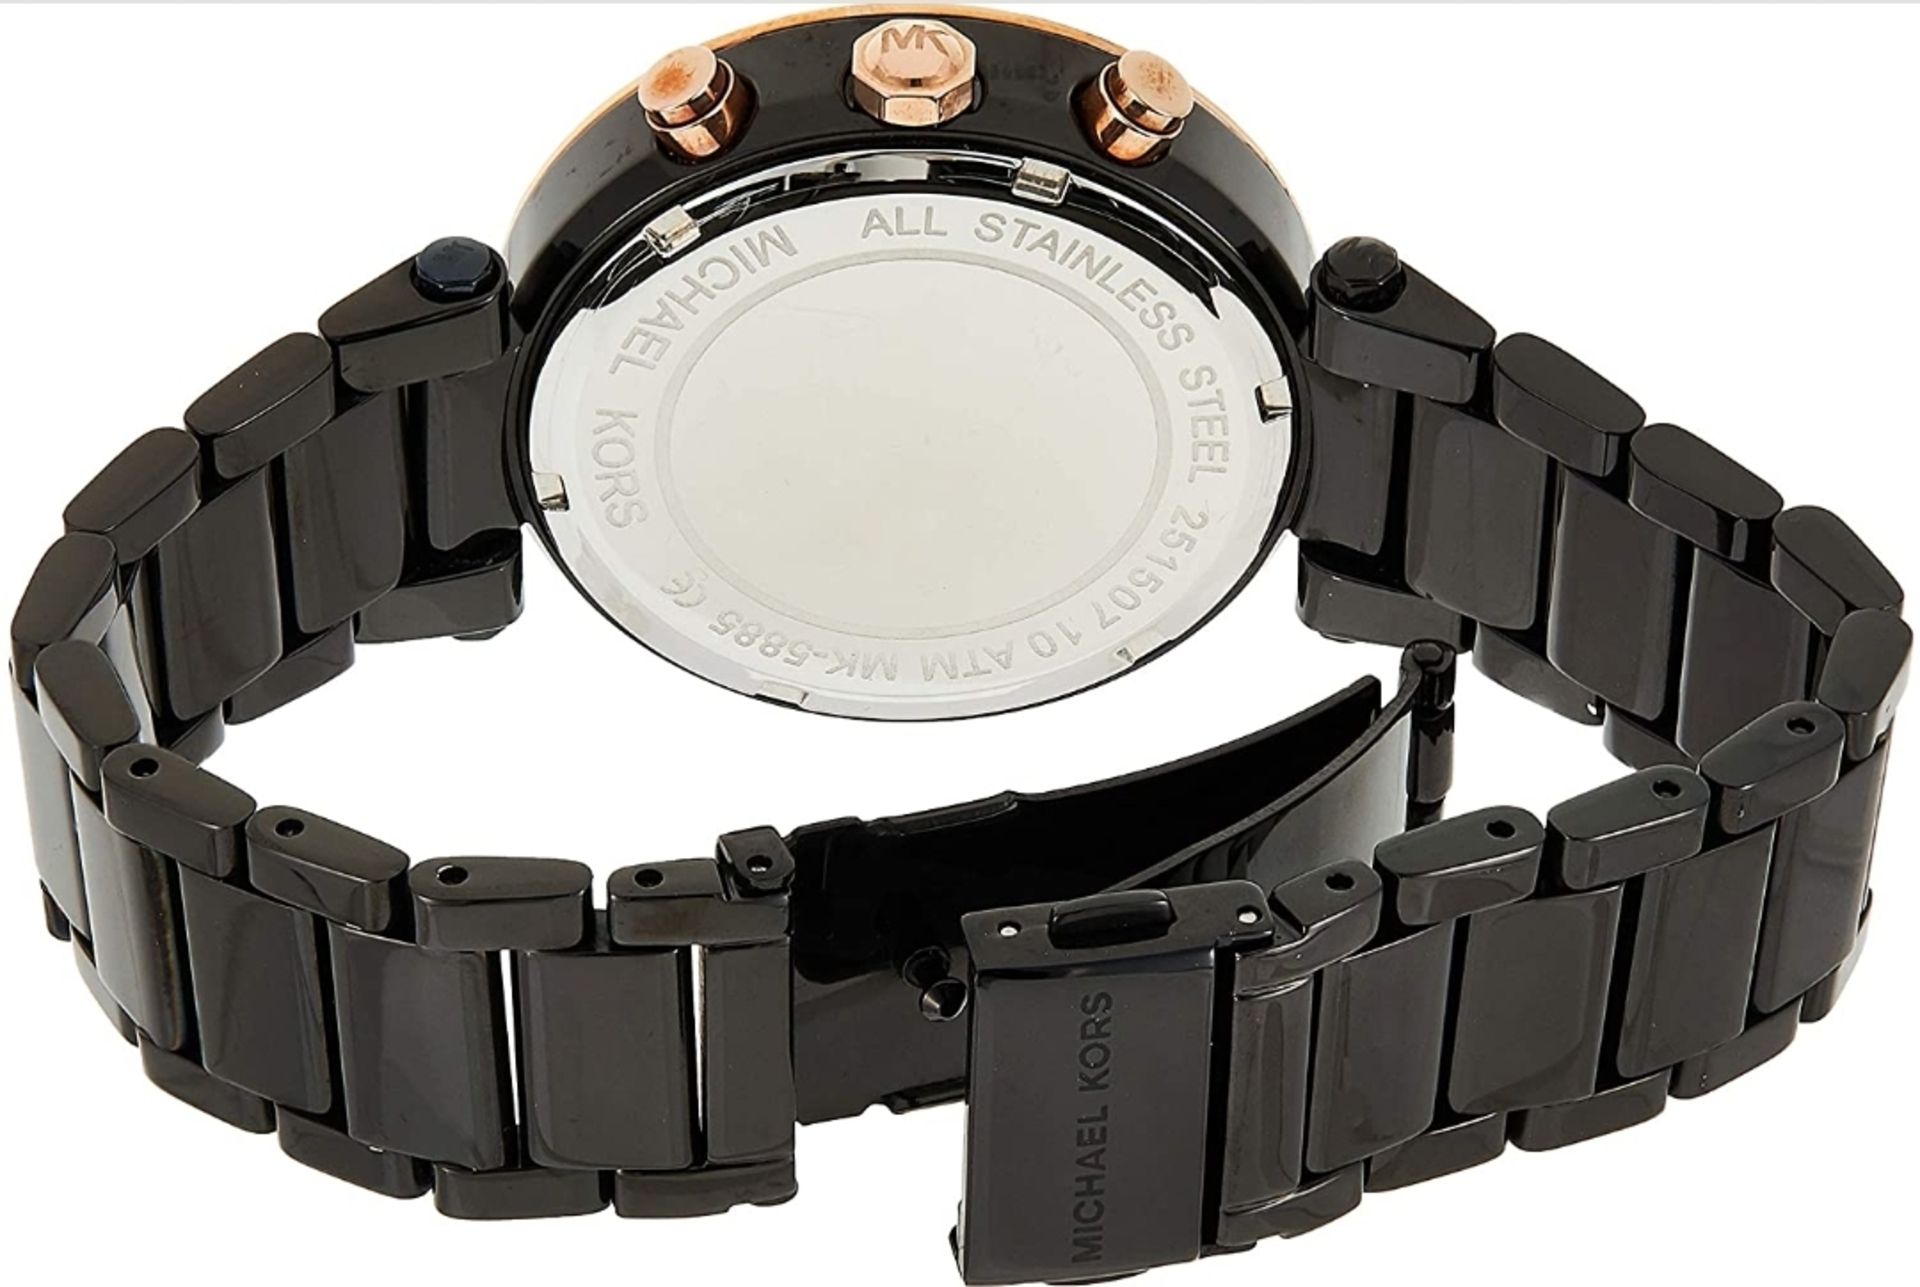 Michael Kors MK5885 Ladies Parker Chronograph Watch - Image 4 of 5